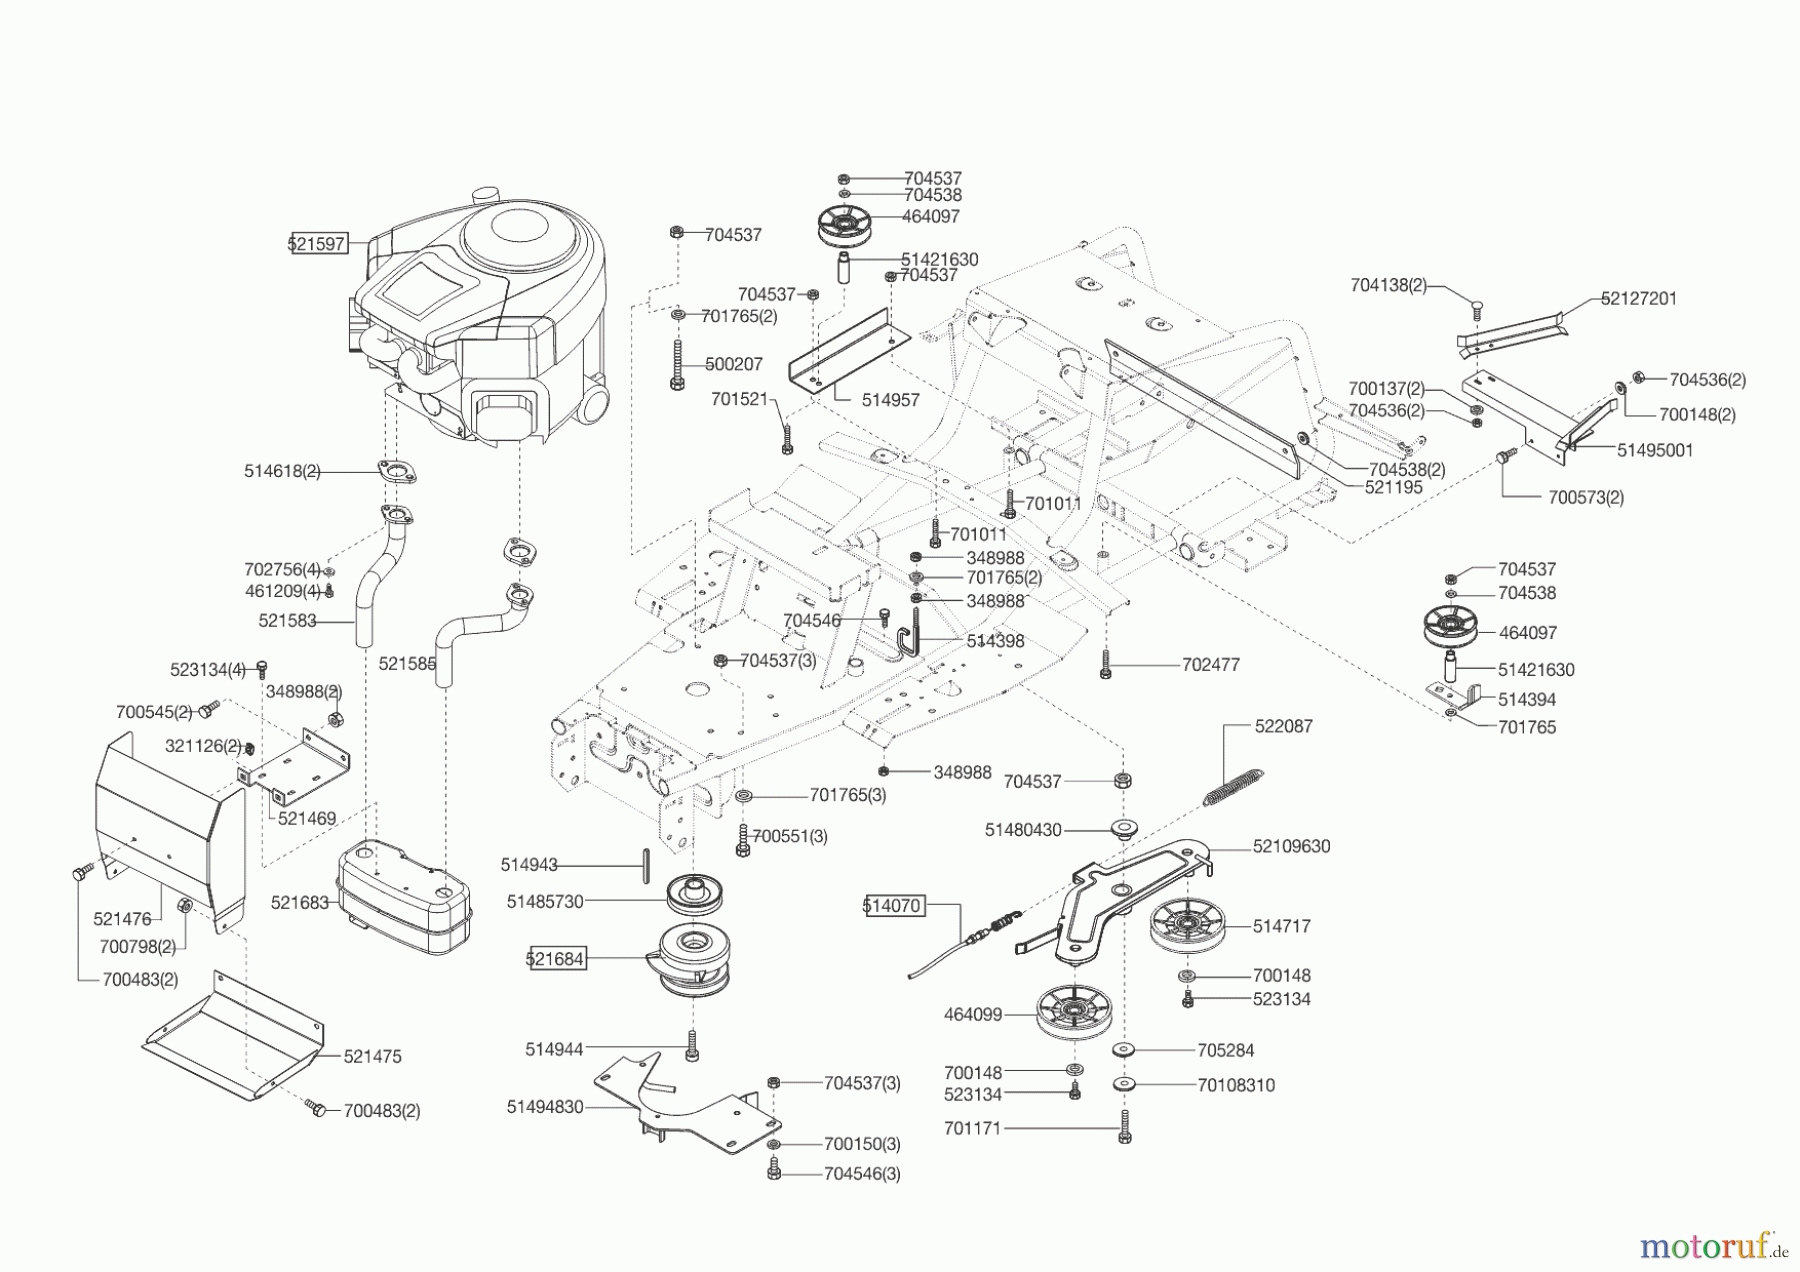  AL-KO Gartentechnik Rasentraktor T 20-102 HD Gulistan  03/2015 - 09/2016 Seite 4